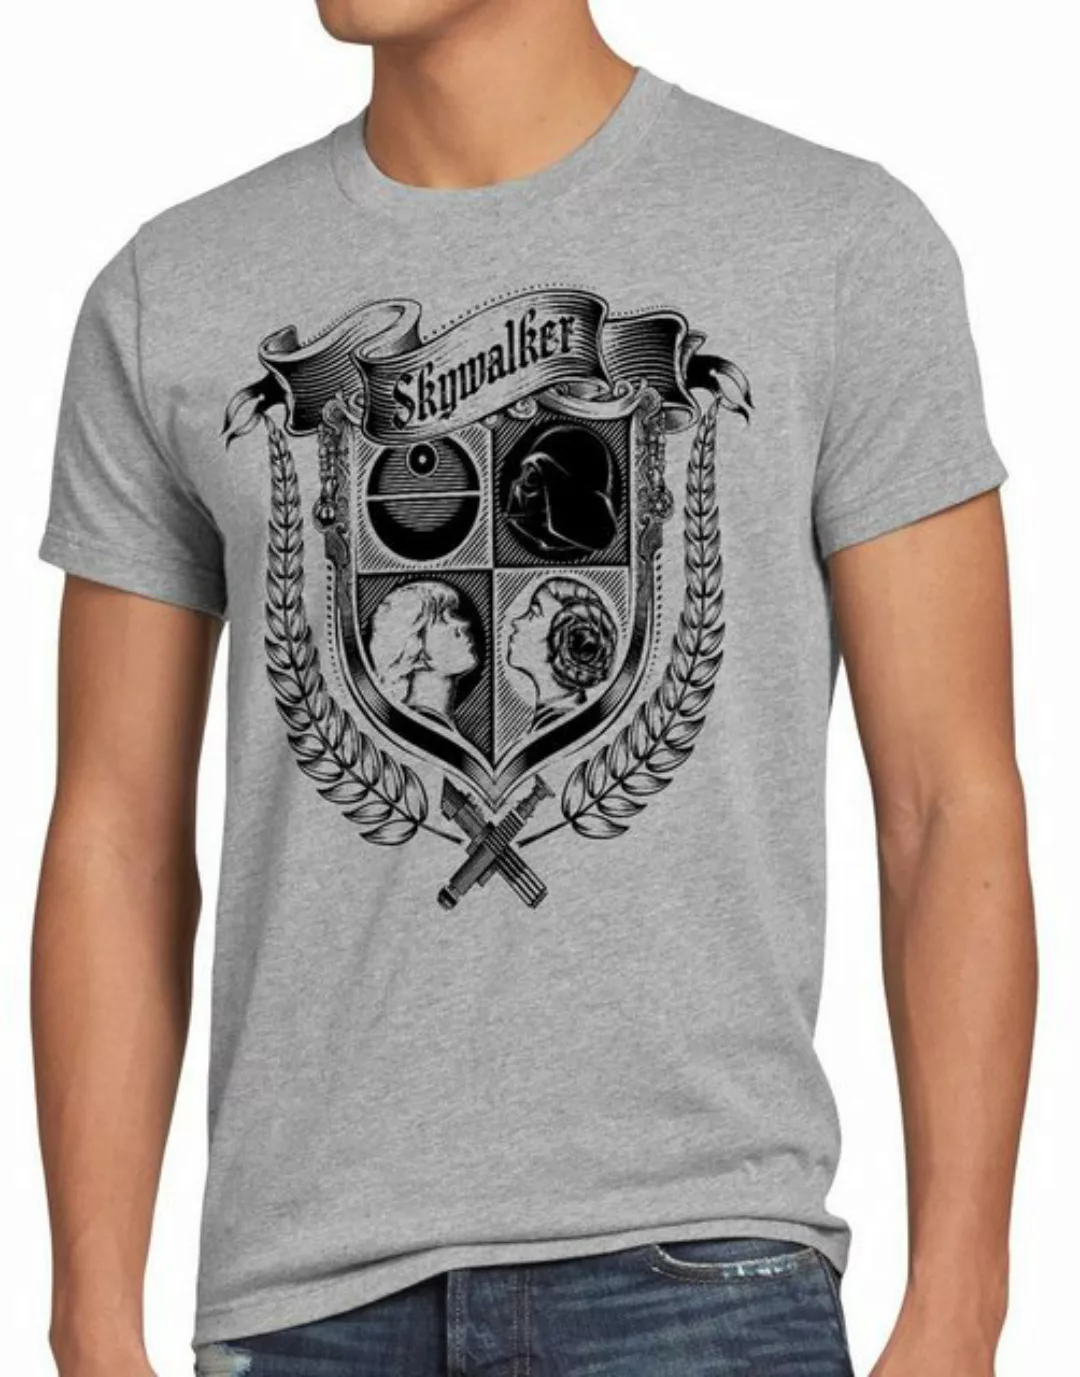 style3 Print-Shirt Herren T-Shirt Skywalker Wappen star krieg rebelliob yod günstig online kaufen